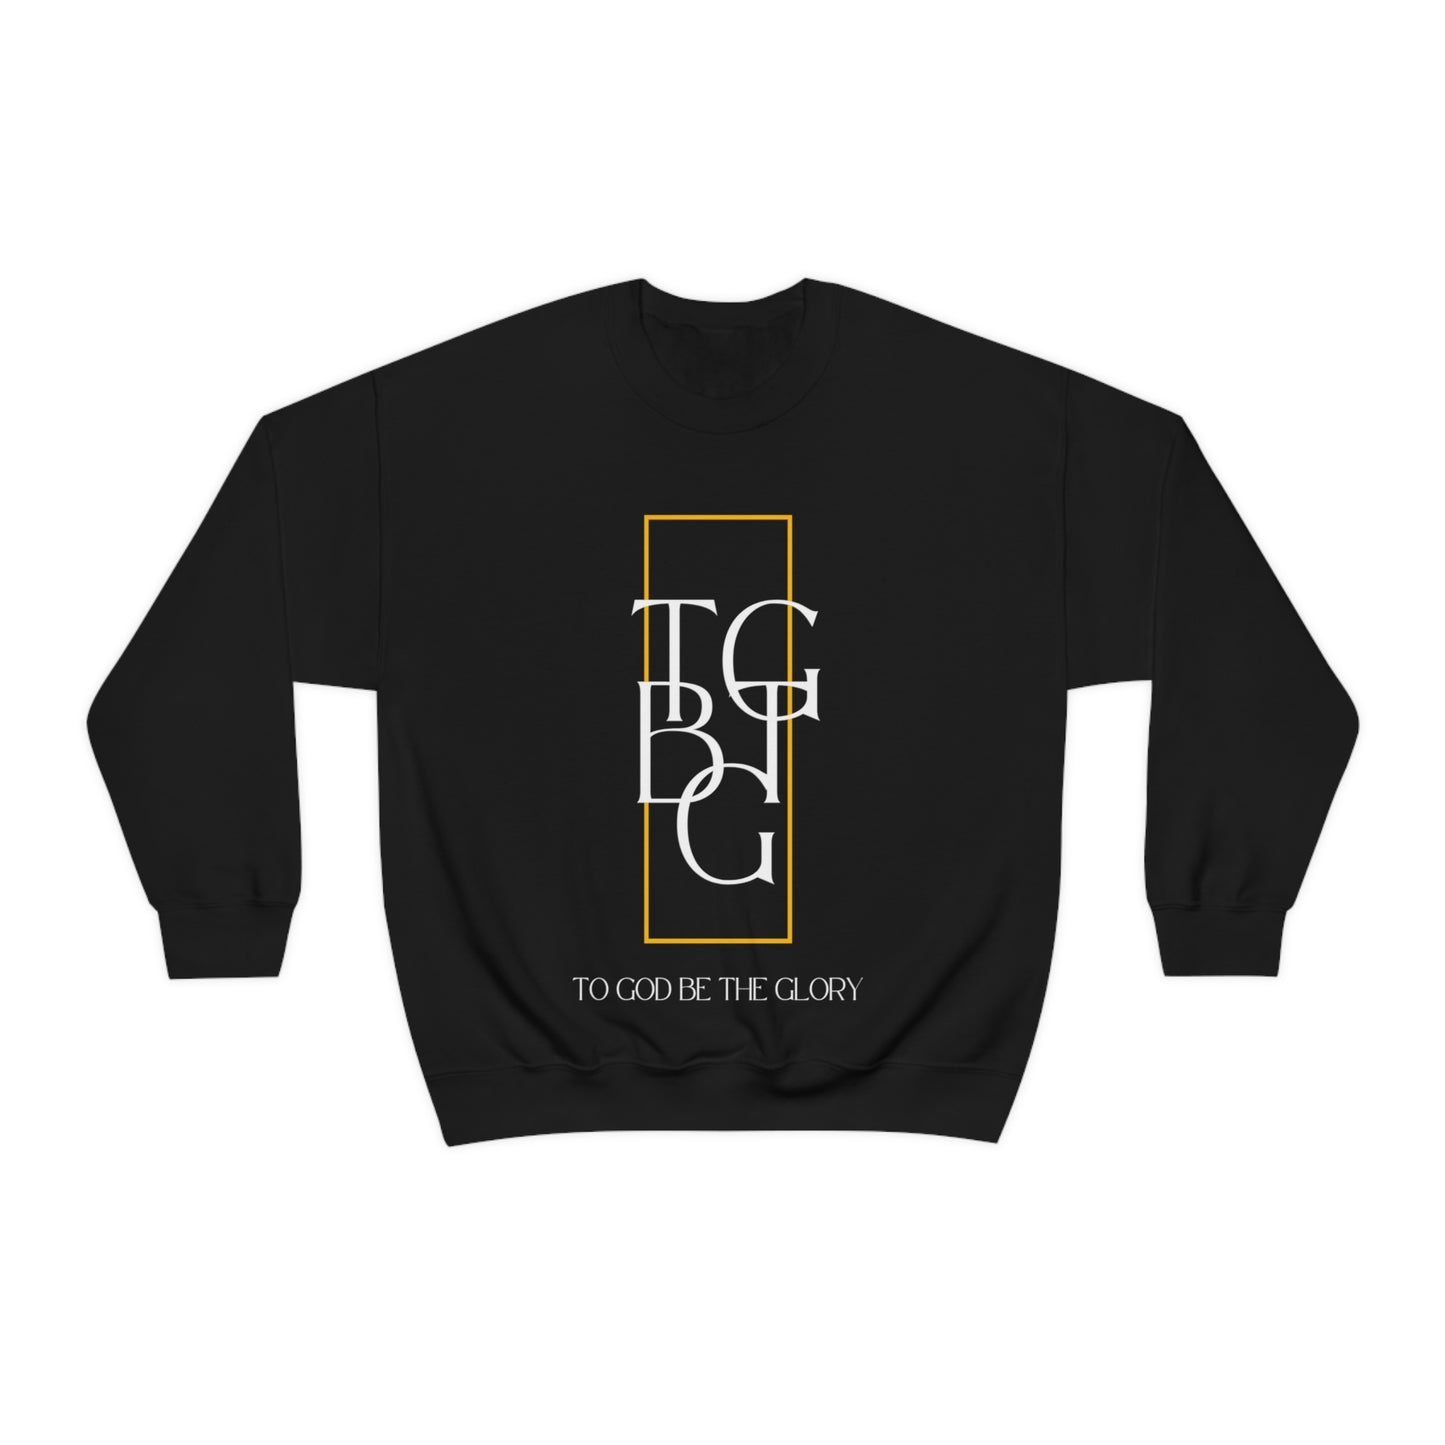 TGBTG Crewneck Sweatshirt in Black